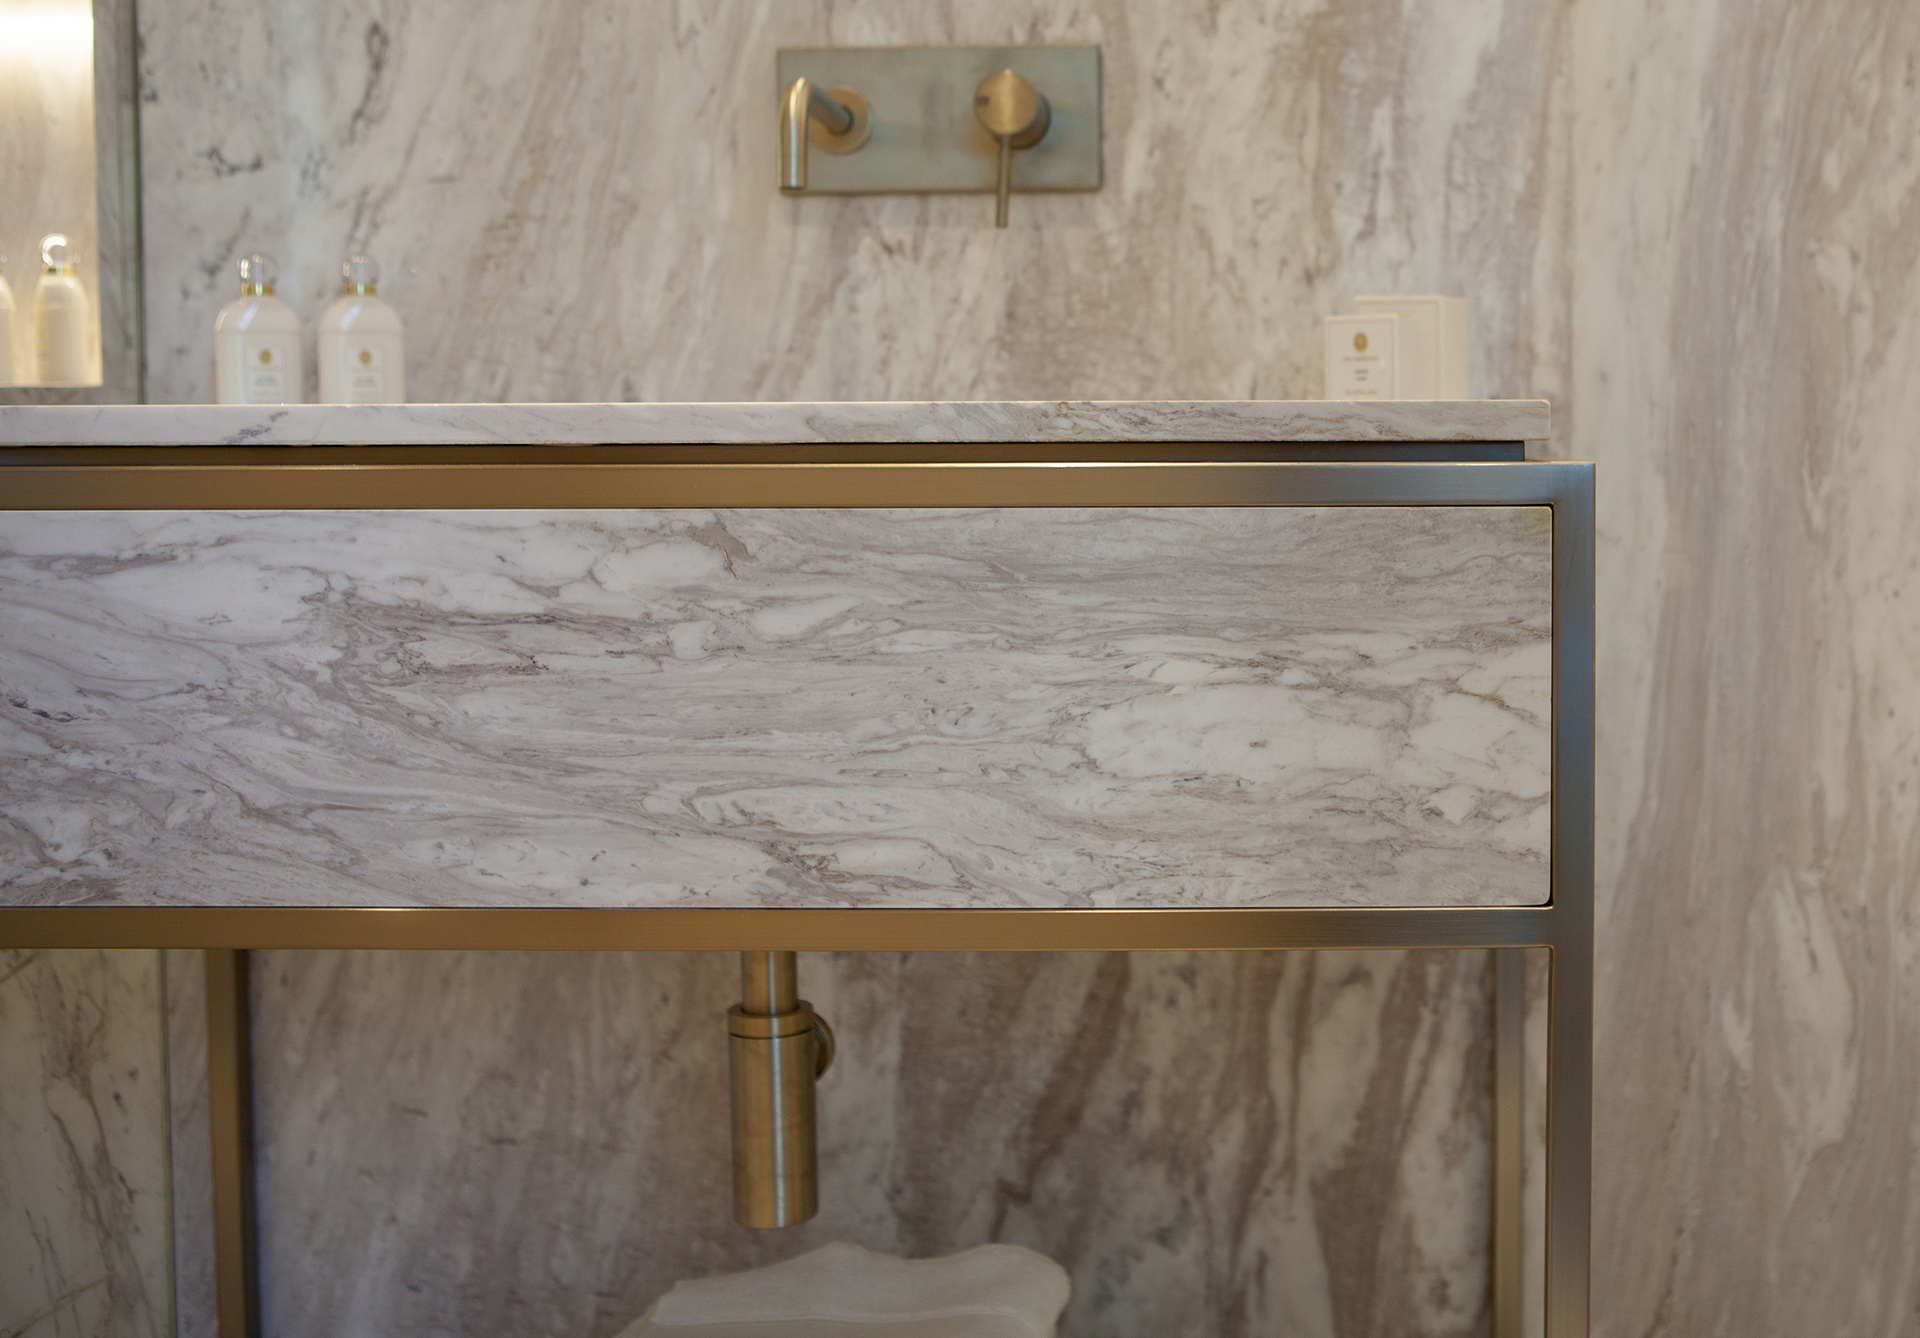 Cherwell Metal Works marble bathroom counter top at Regal London Dubai, Luxury marble and metal work washbasin.